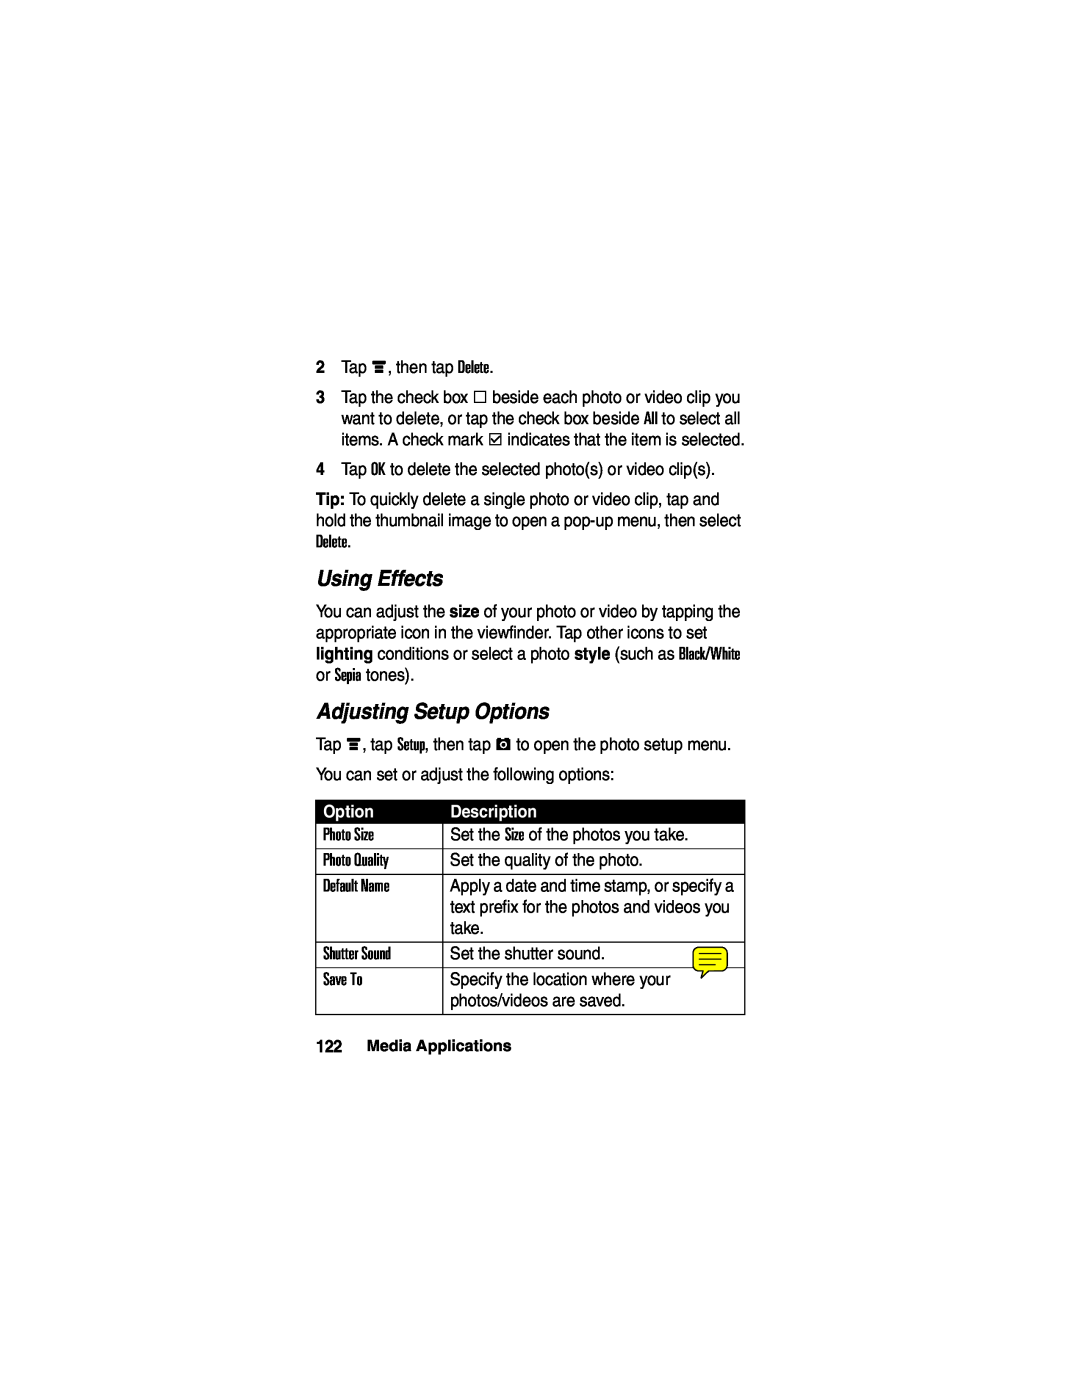 Motorola A780 manual Using Effects, Adjusting Setup Options, Description 